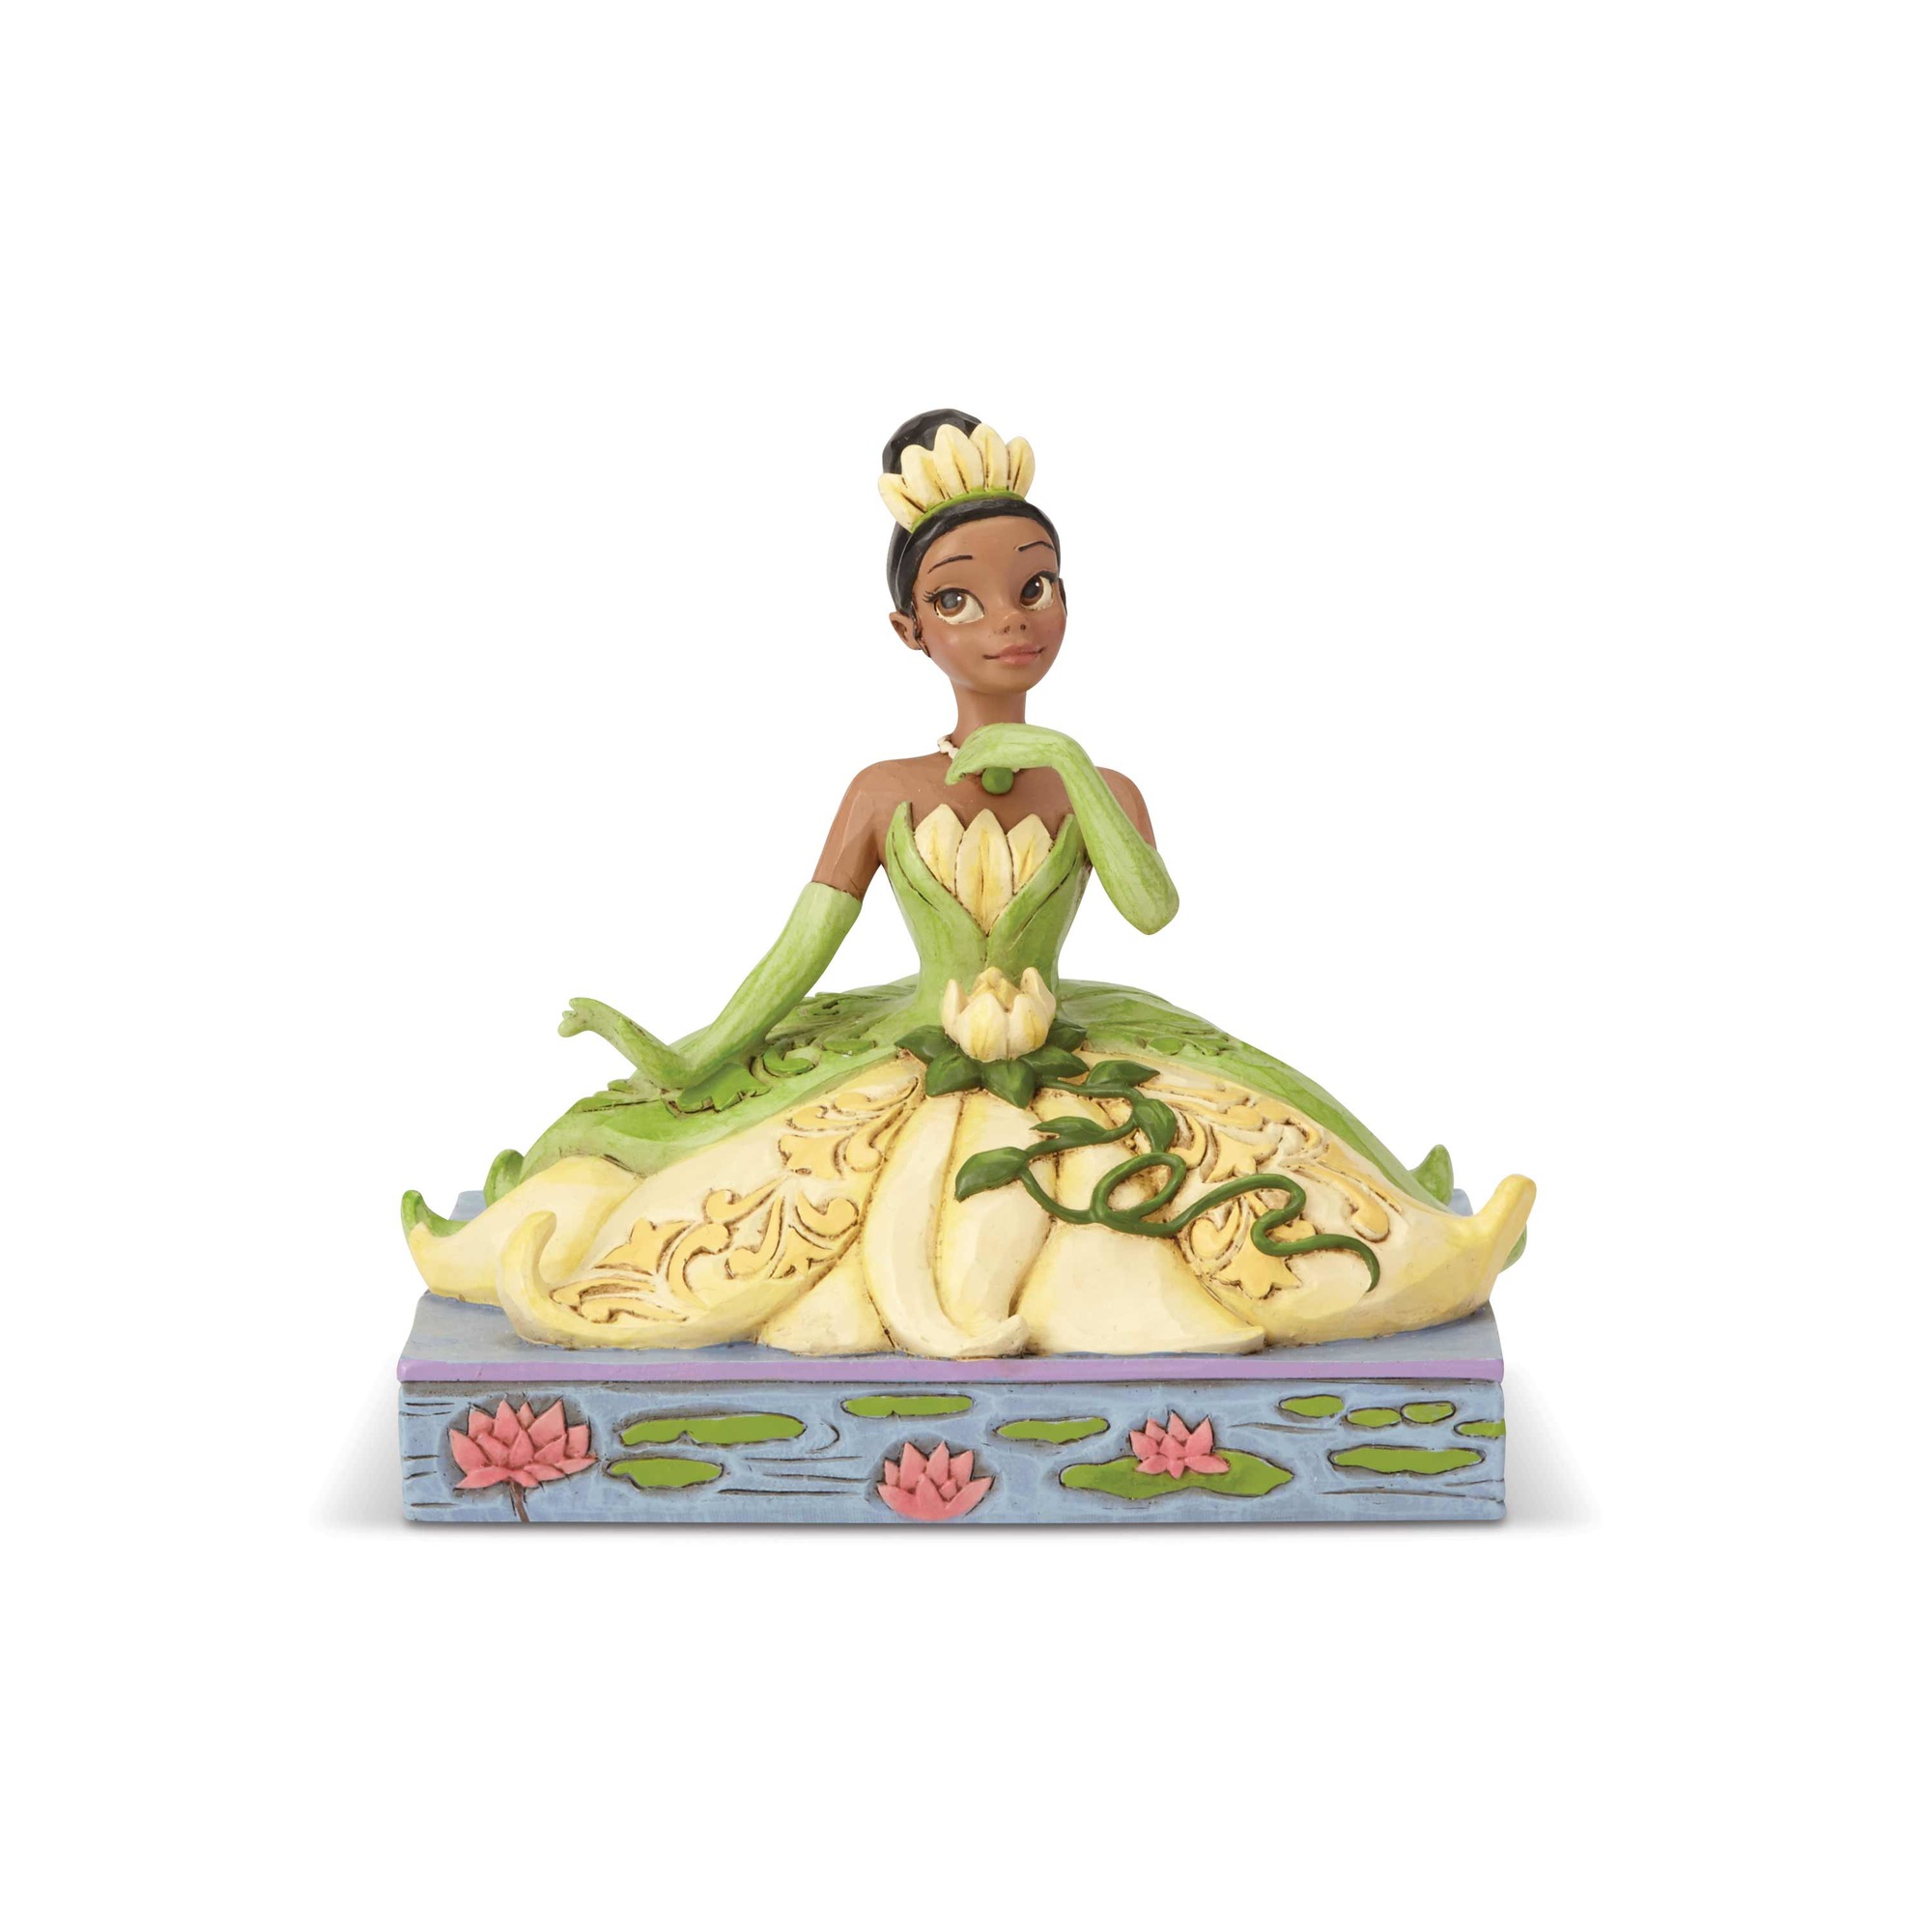 Disney Traditions Tiana Personality Pose Figurine